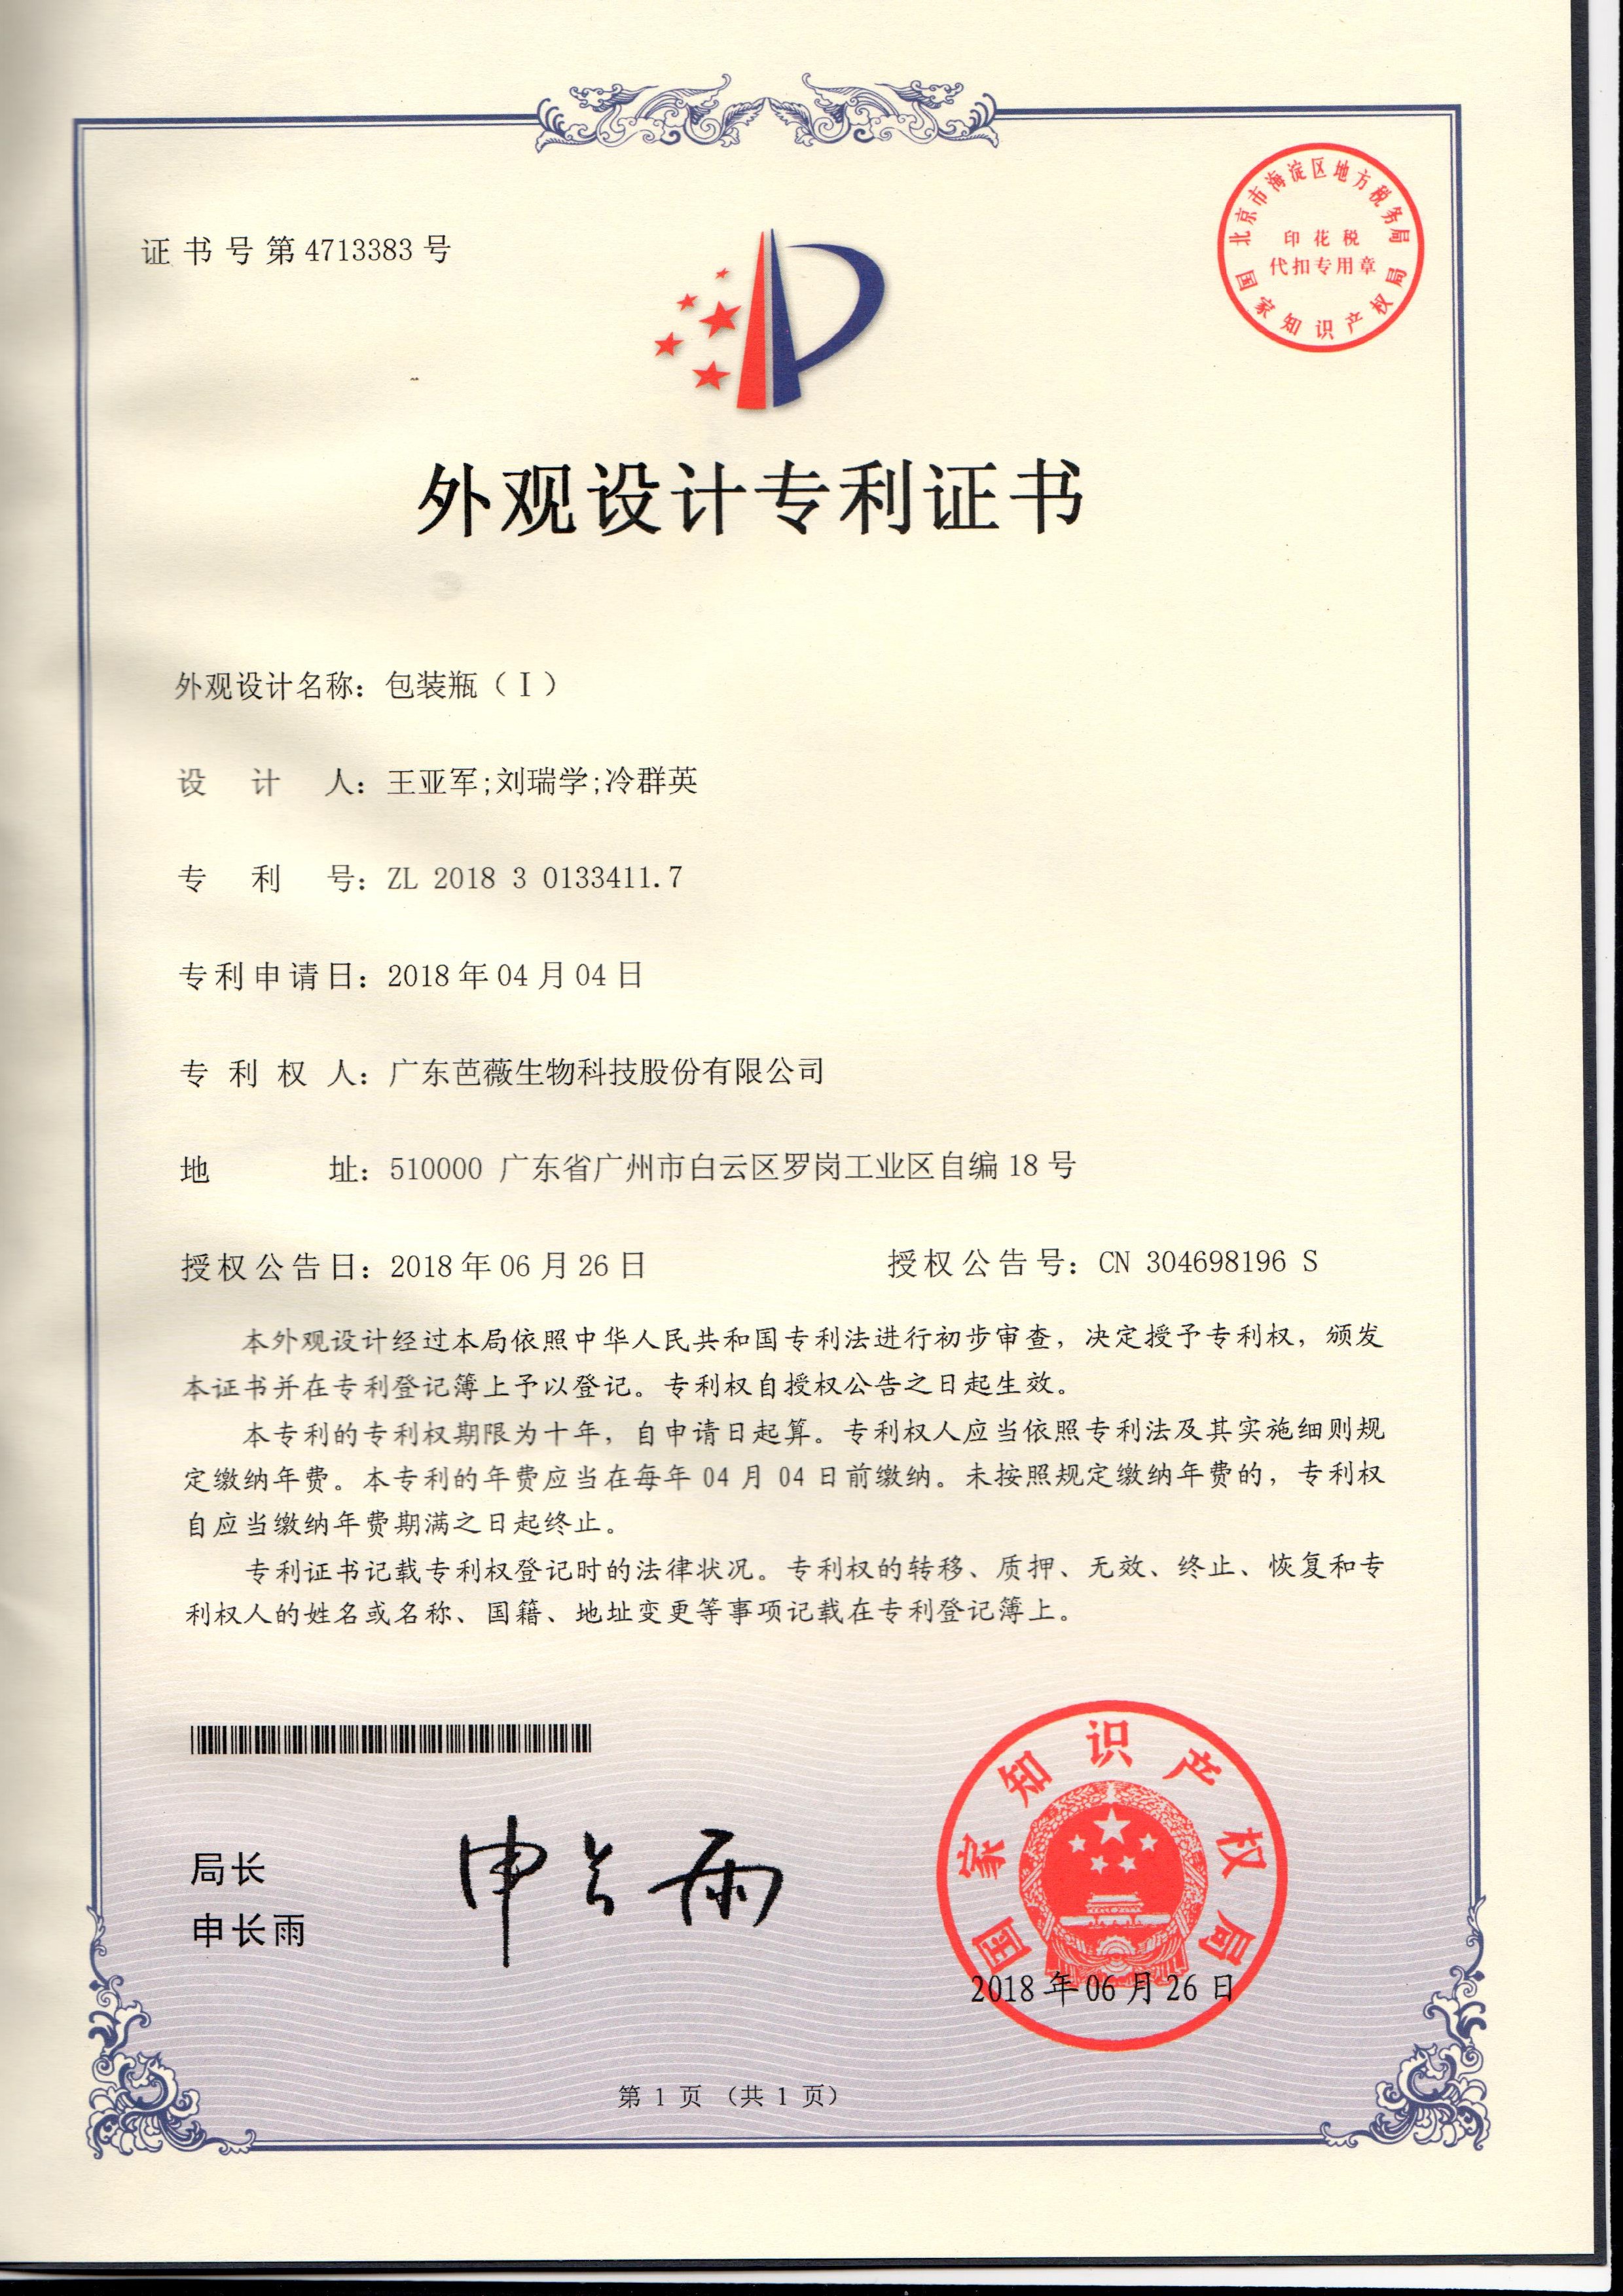 Bawei Patent